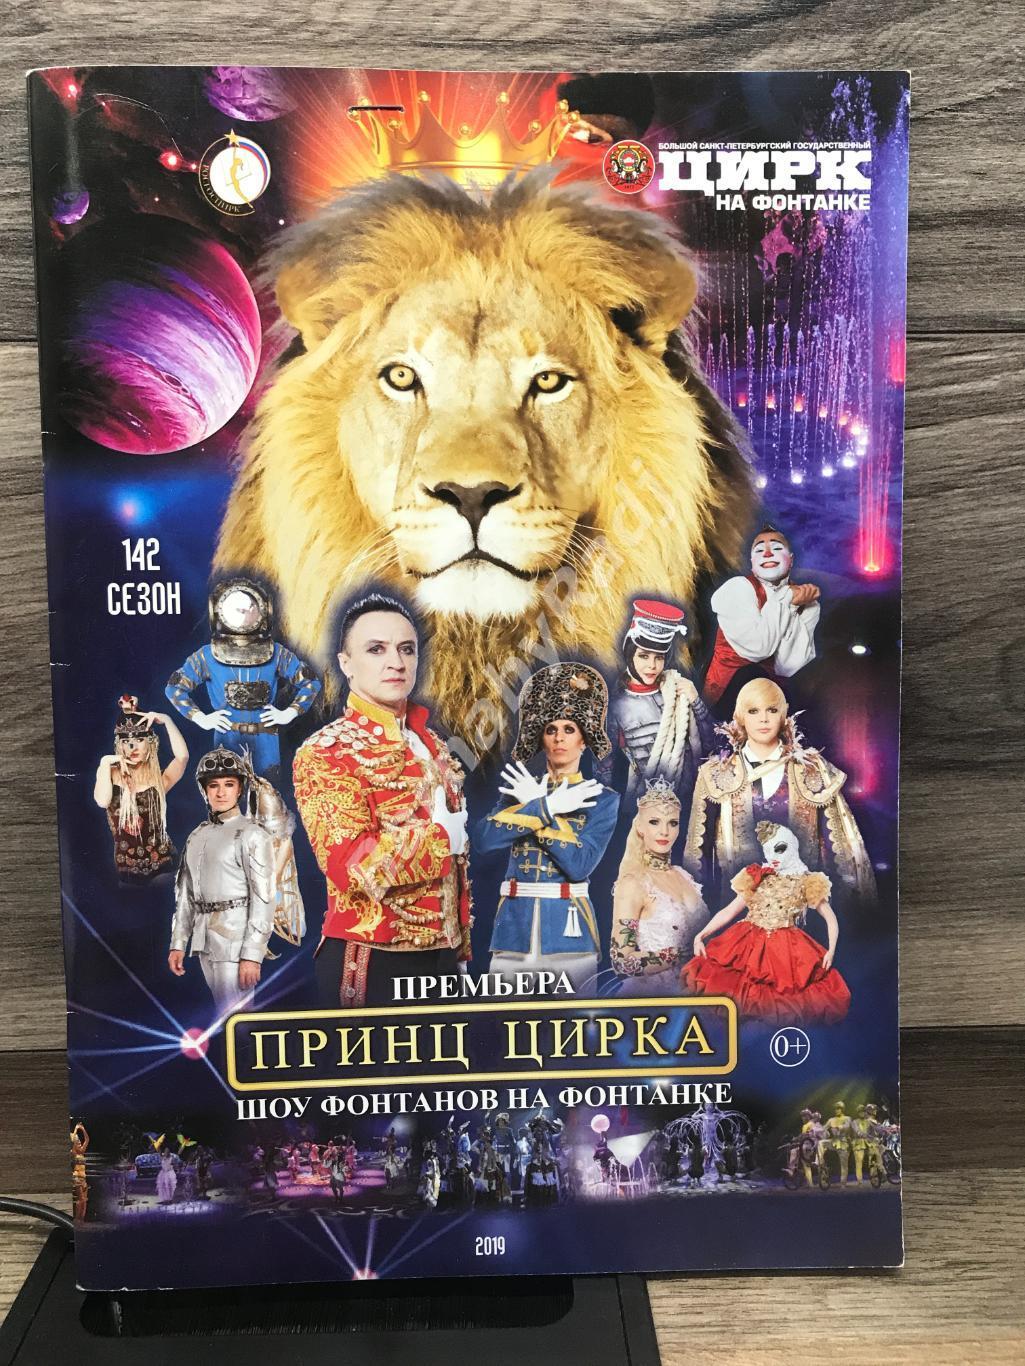 2019 г. Программа 142 сезон Цирк на Фонтанке Принц цирка Шоу фонтанов.